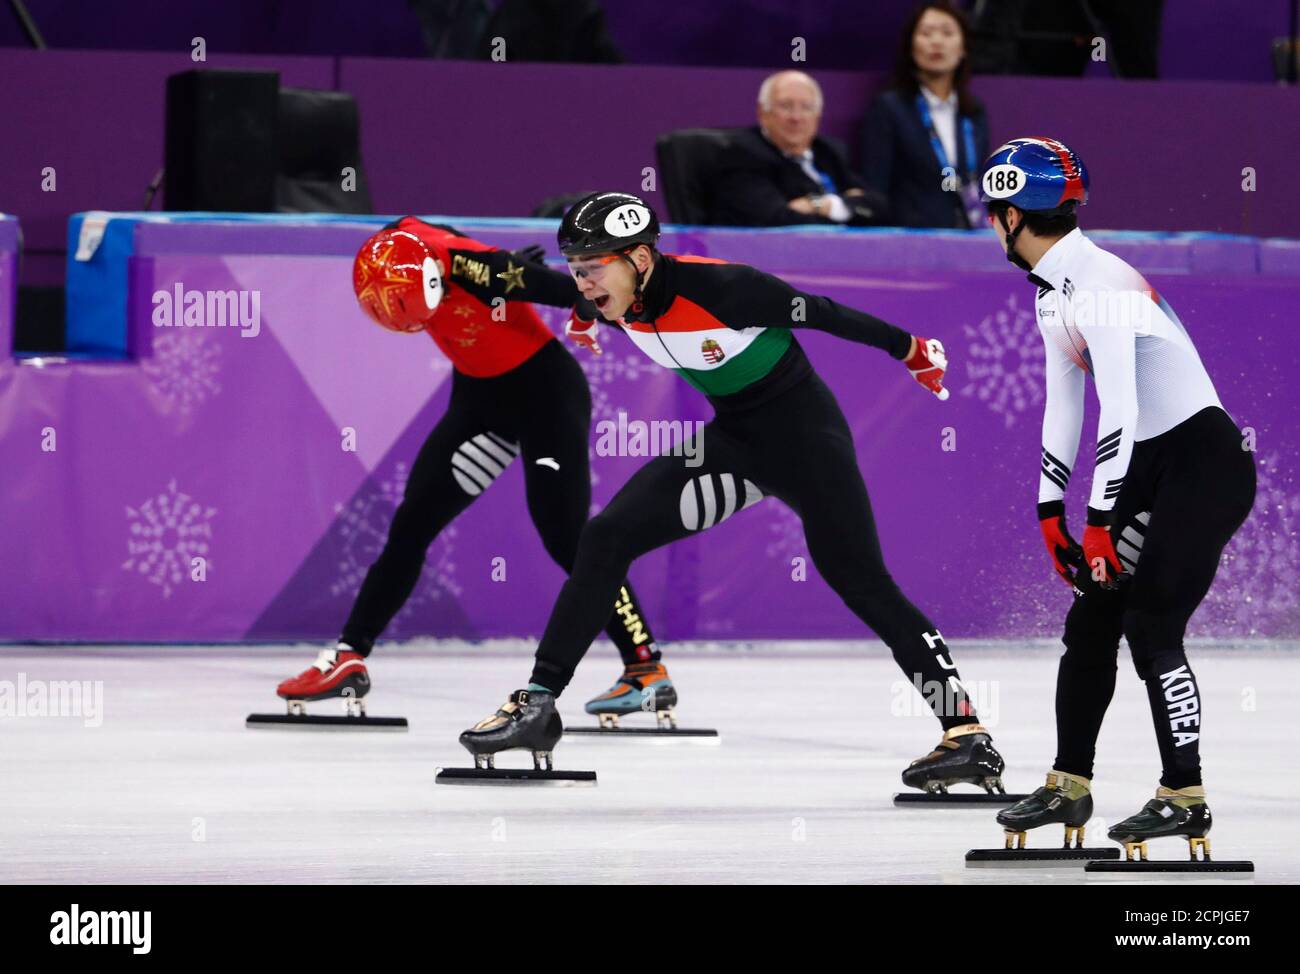 Short Track Speed Skating Events - Pyeongchang 2018 Winter Olympics - Men's  5000m Relay Final - Gangneung Ice Arena - Gangneung, South Korea - February  22, 2018 - Sandor Liu Shaolin of